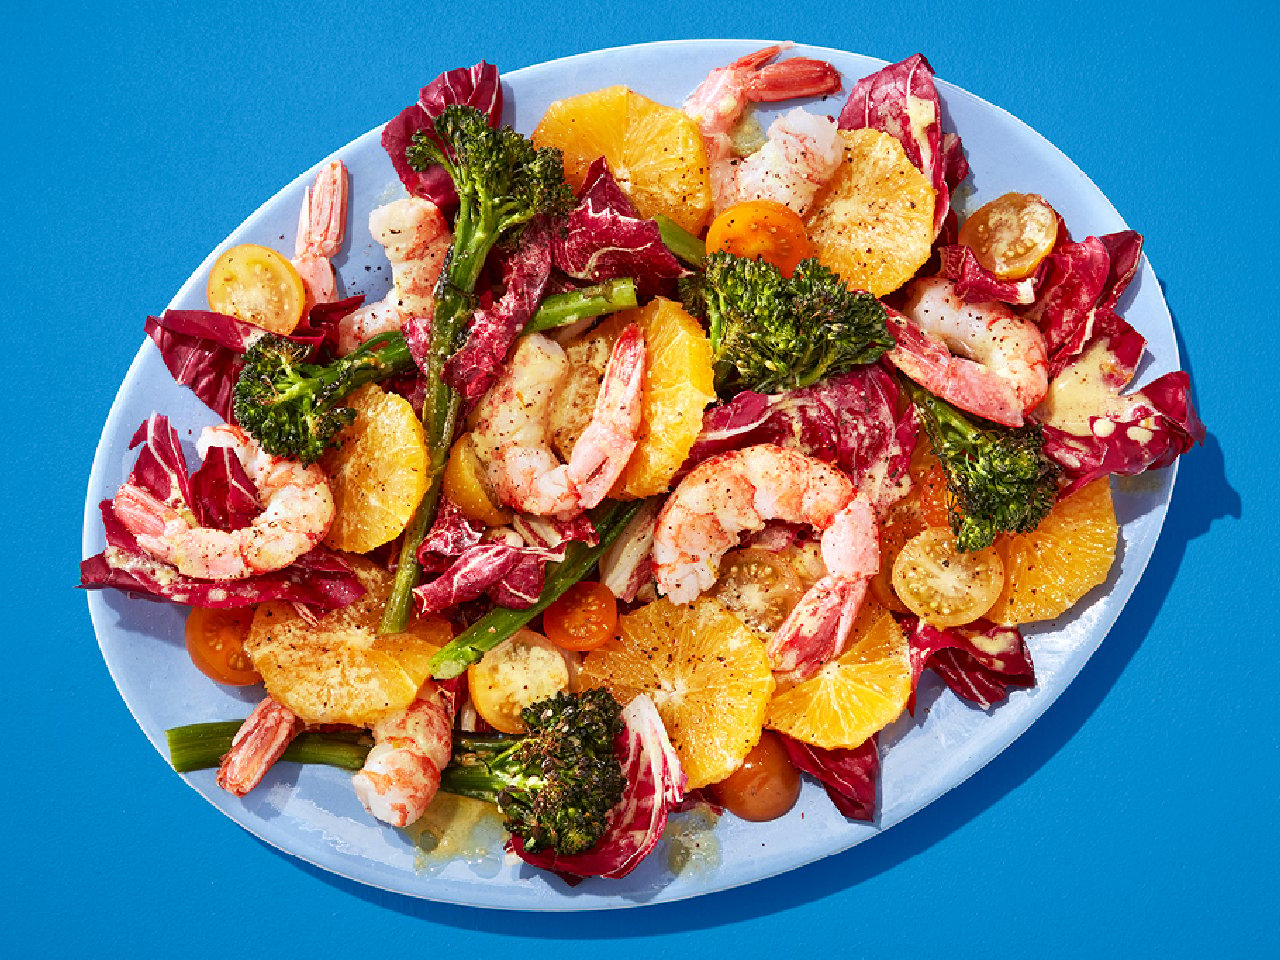 Shrimp and Orange Salad with Roasted Broccolini